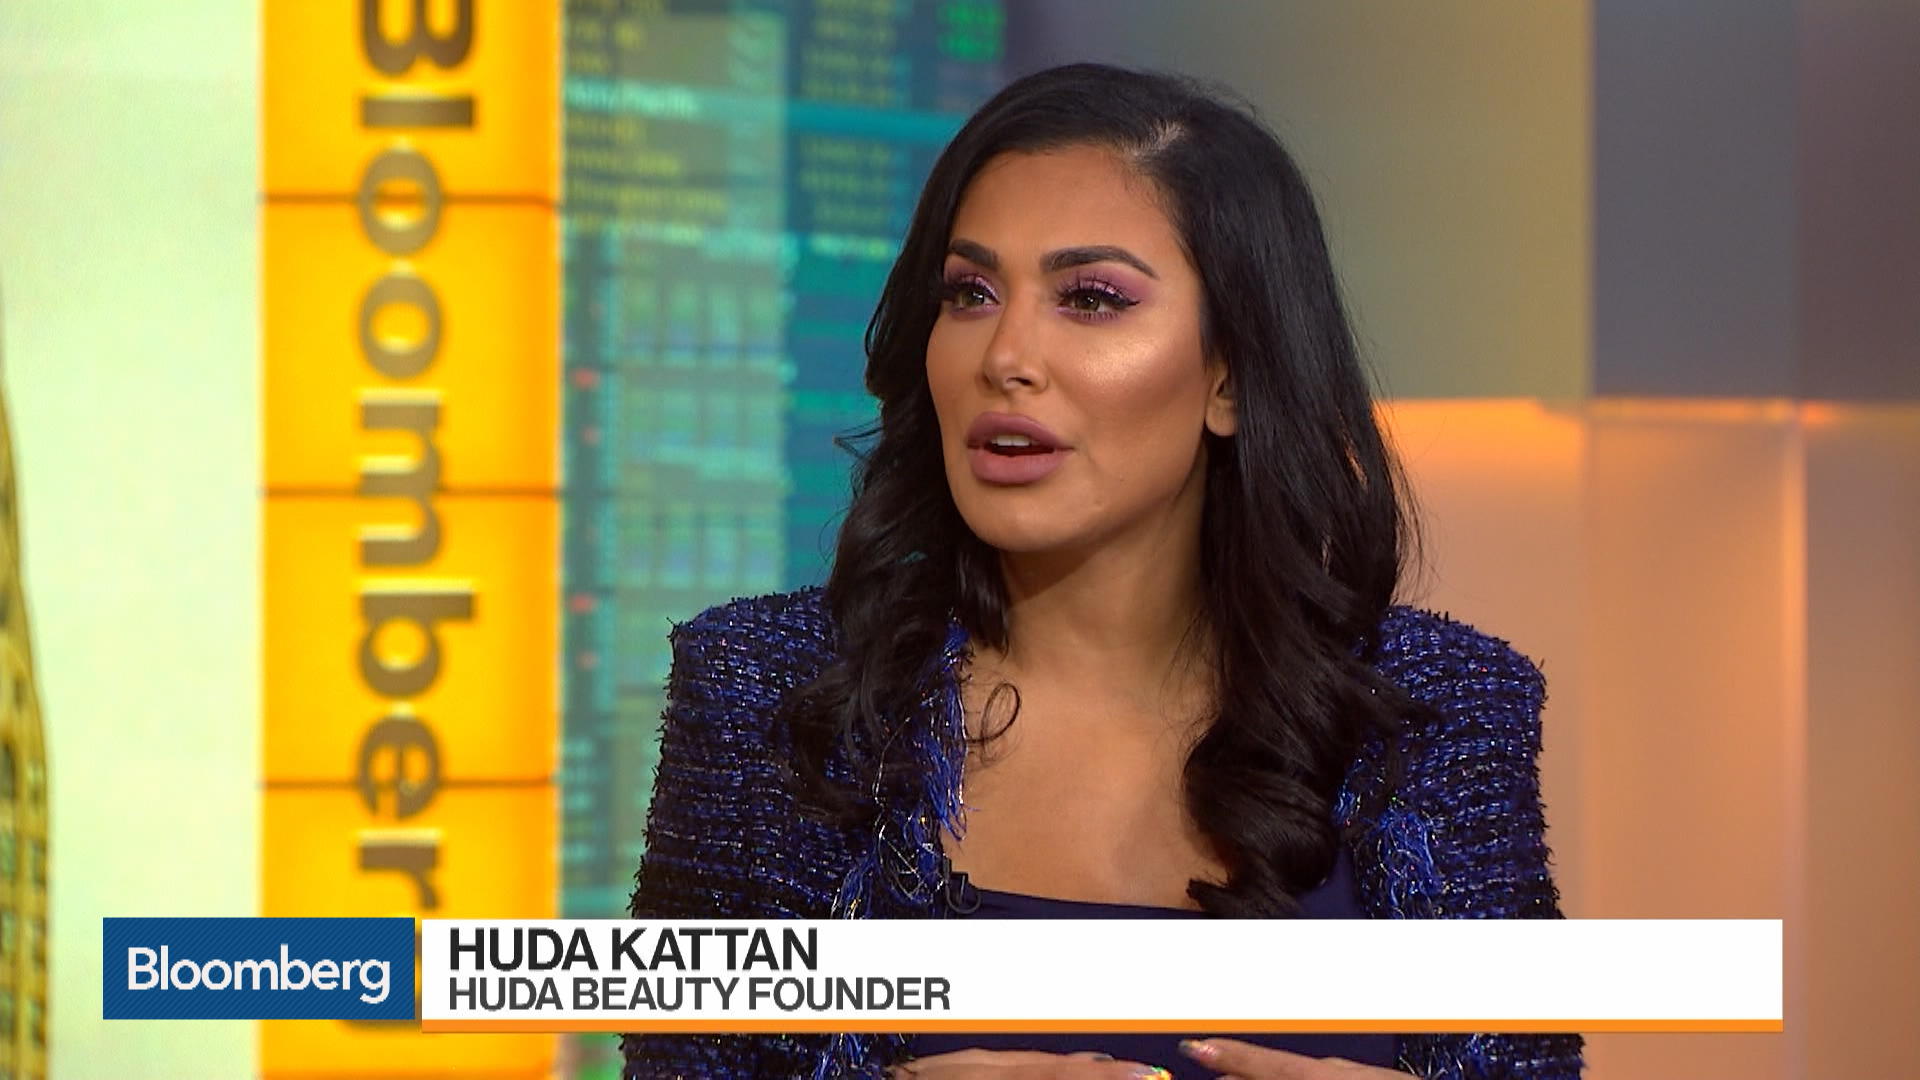 From Blogger to Billionaire: The Huda Kattan Success Story